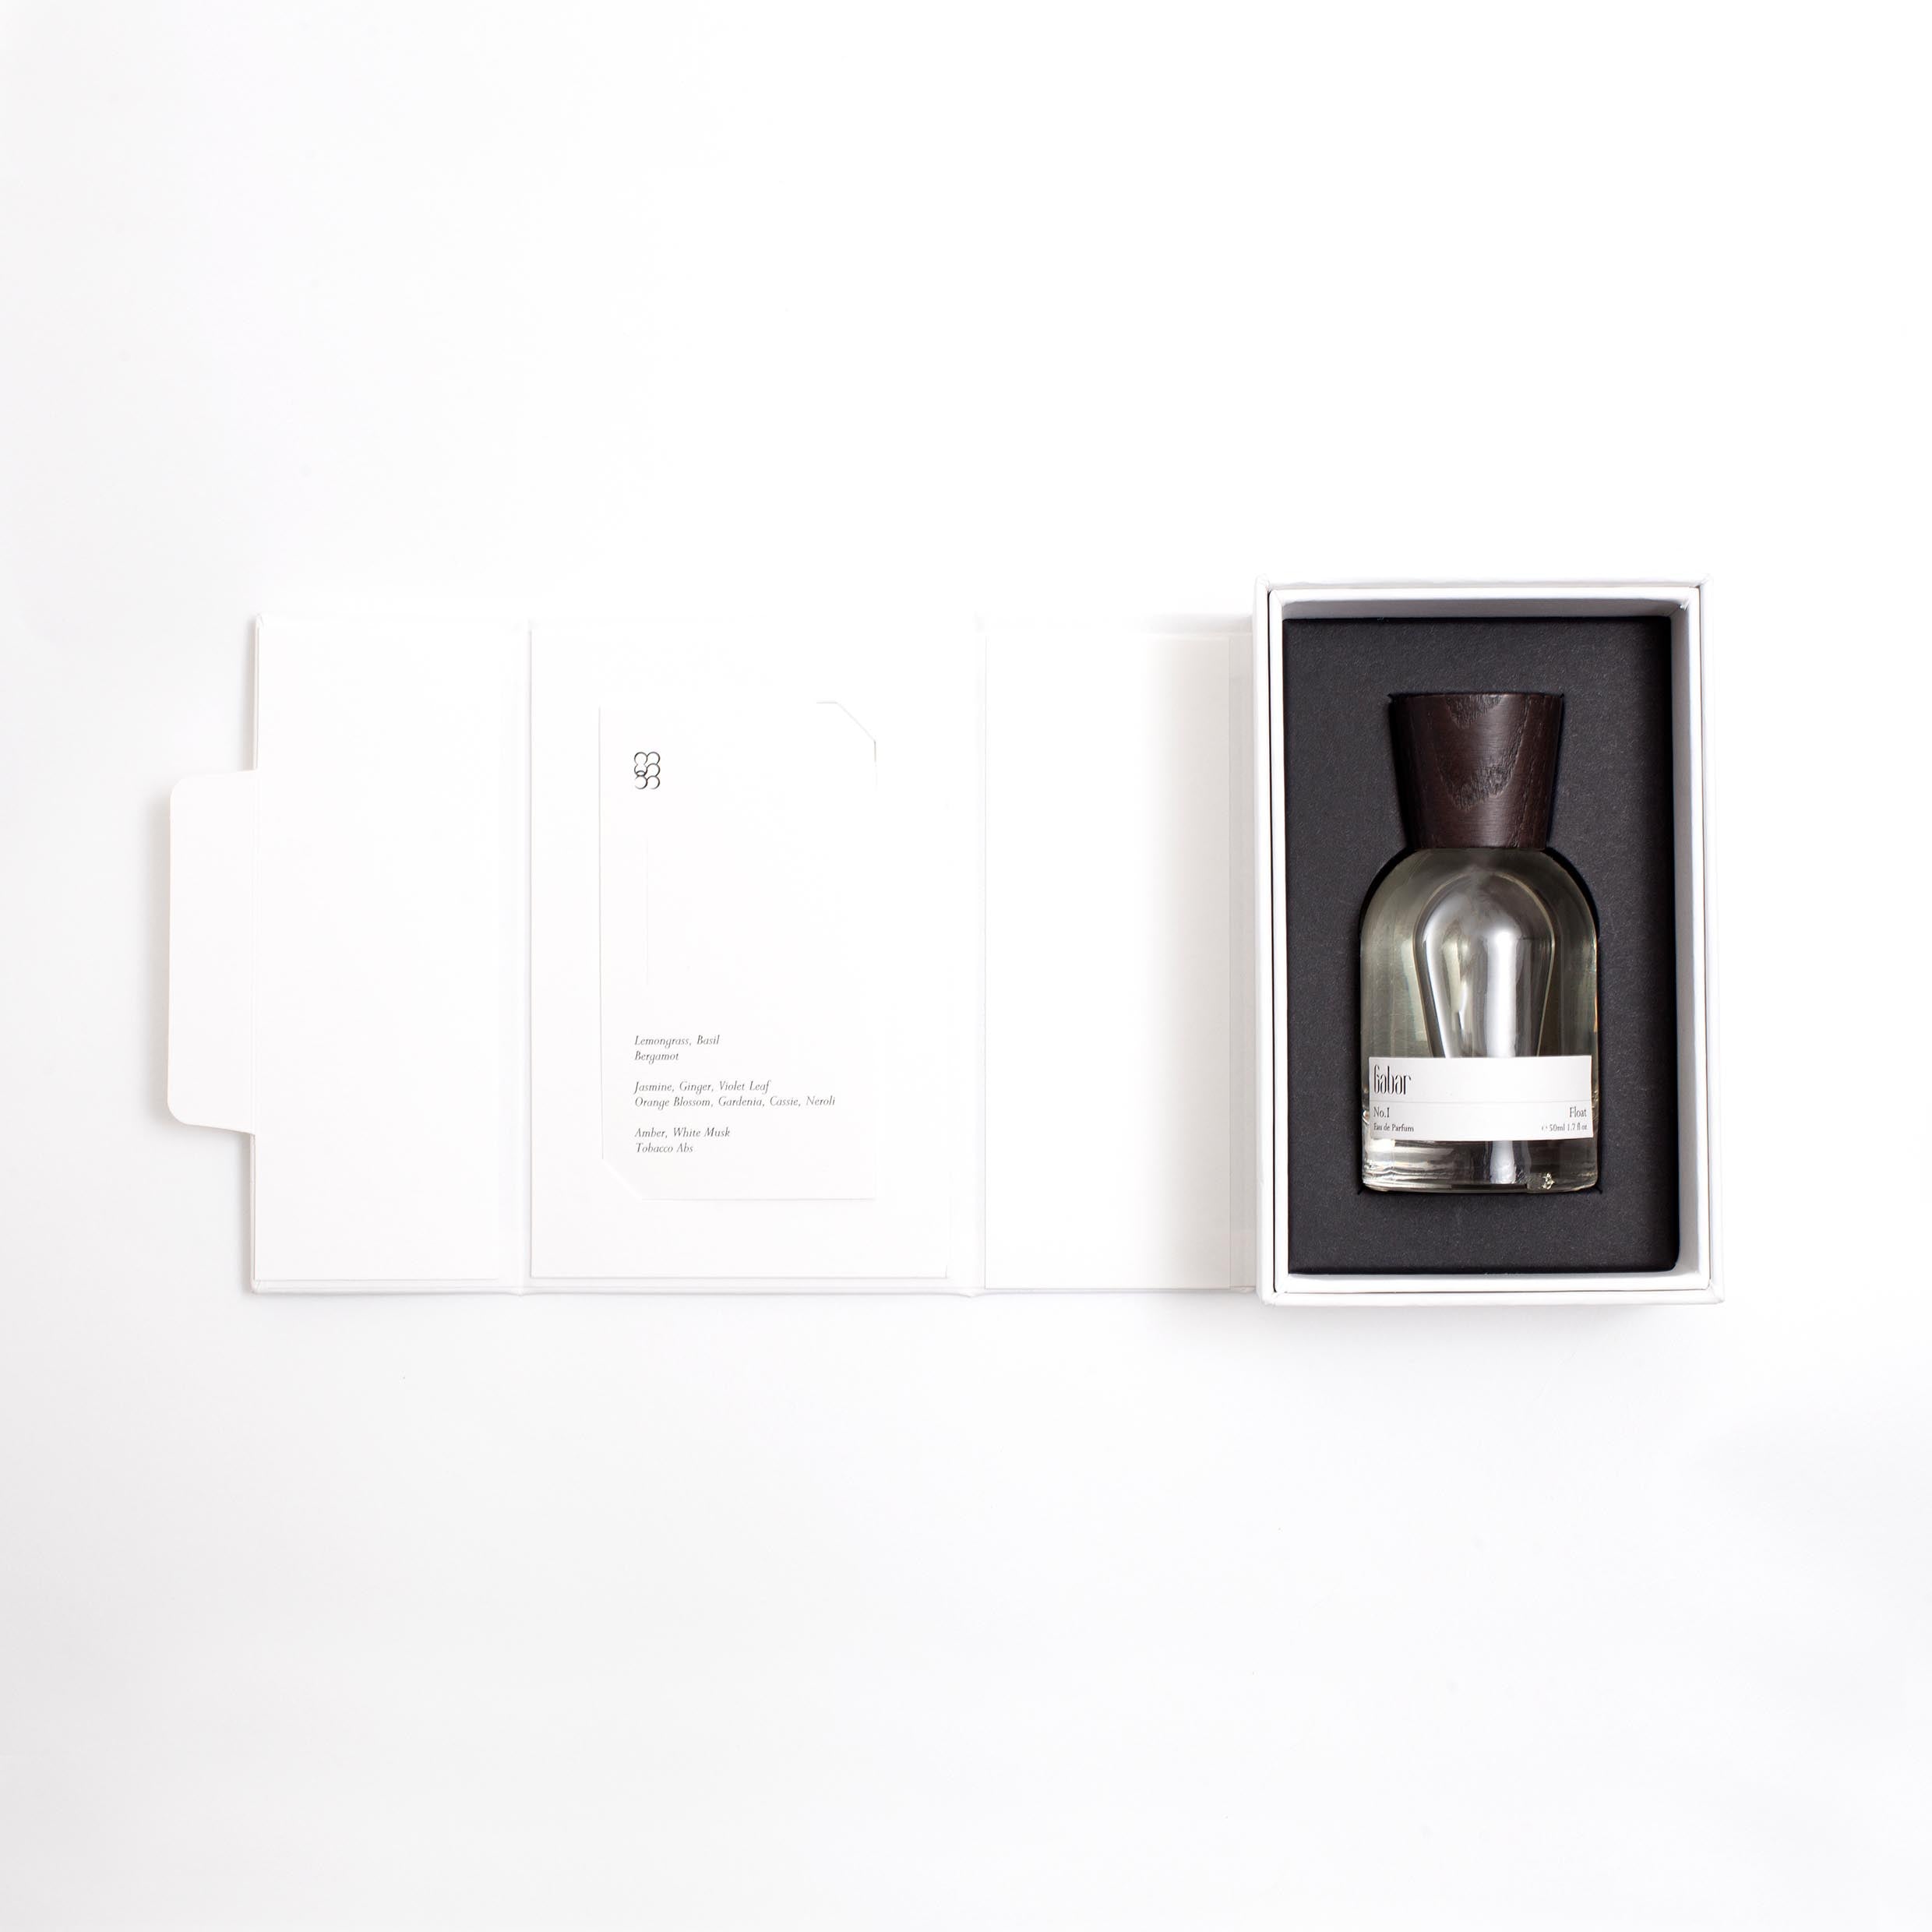  No.1 Float 50ml Eau de Parfum Bottle and Box by Gabar